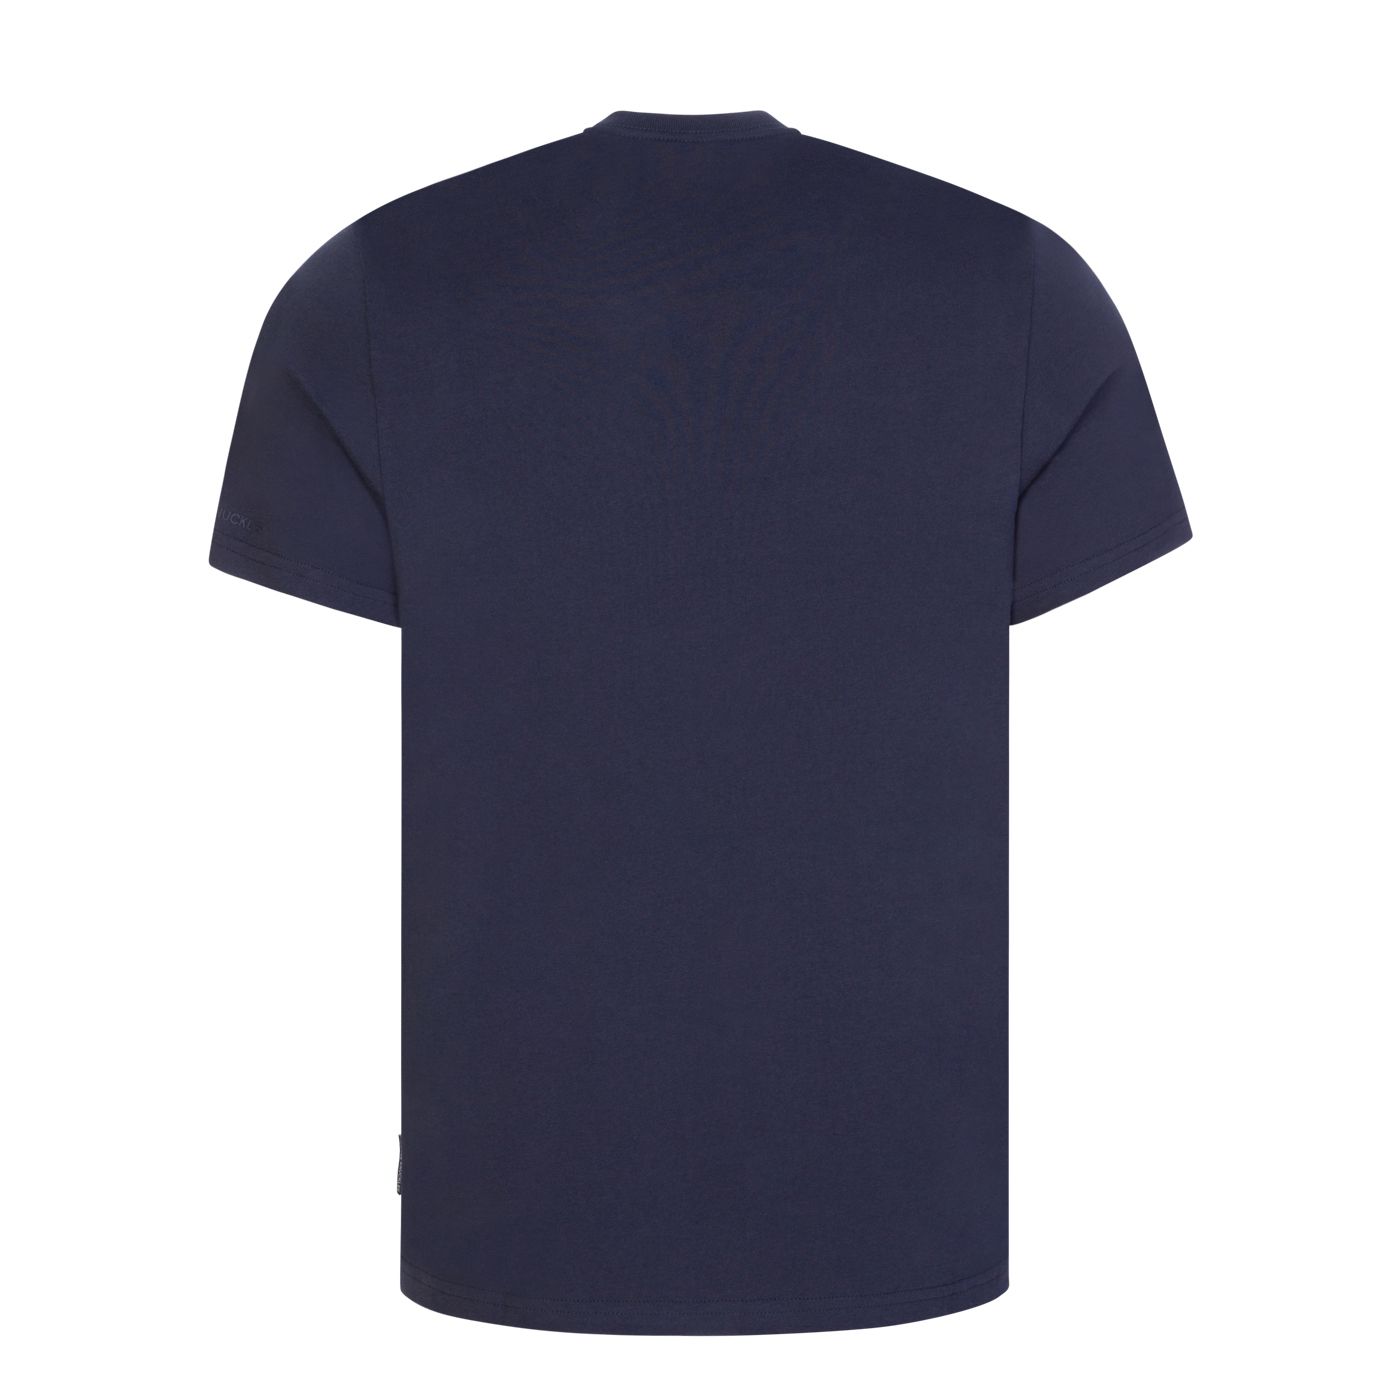 Moose Knuckles Gerrard T-Shirt - 833 Navy - Escape Menswear